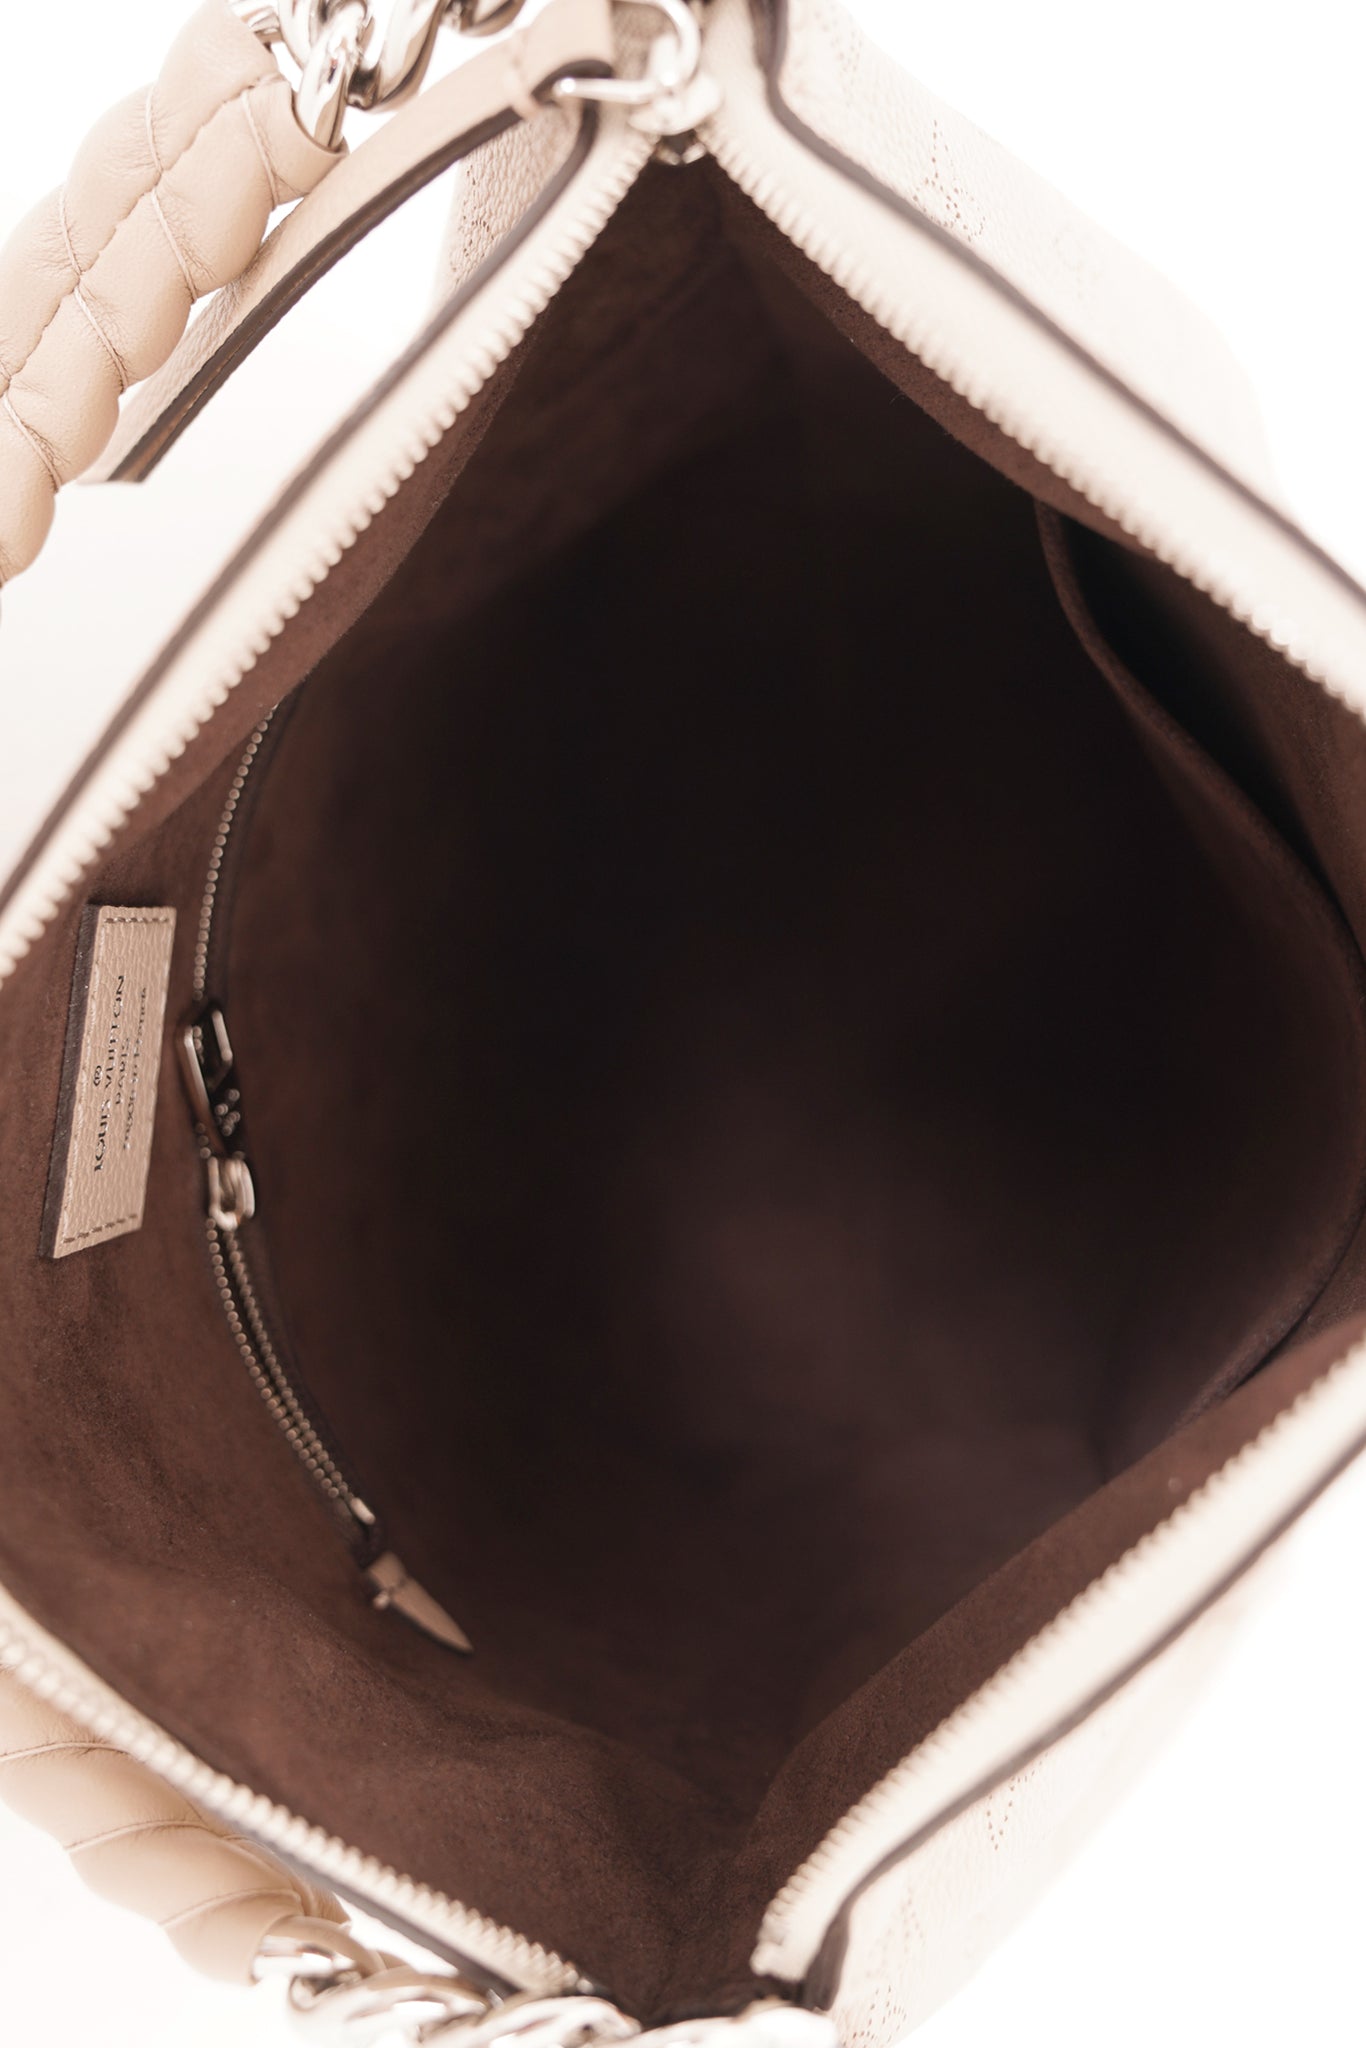 How To Spot a Fake Goyard Bag – StyleCaster